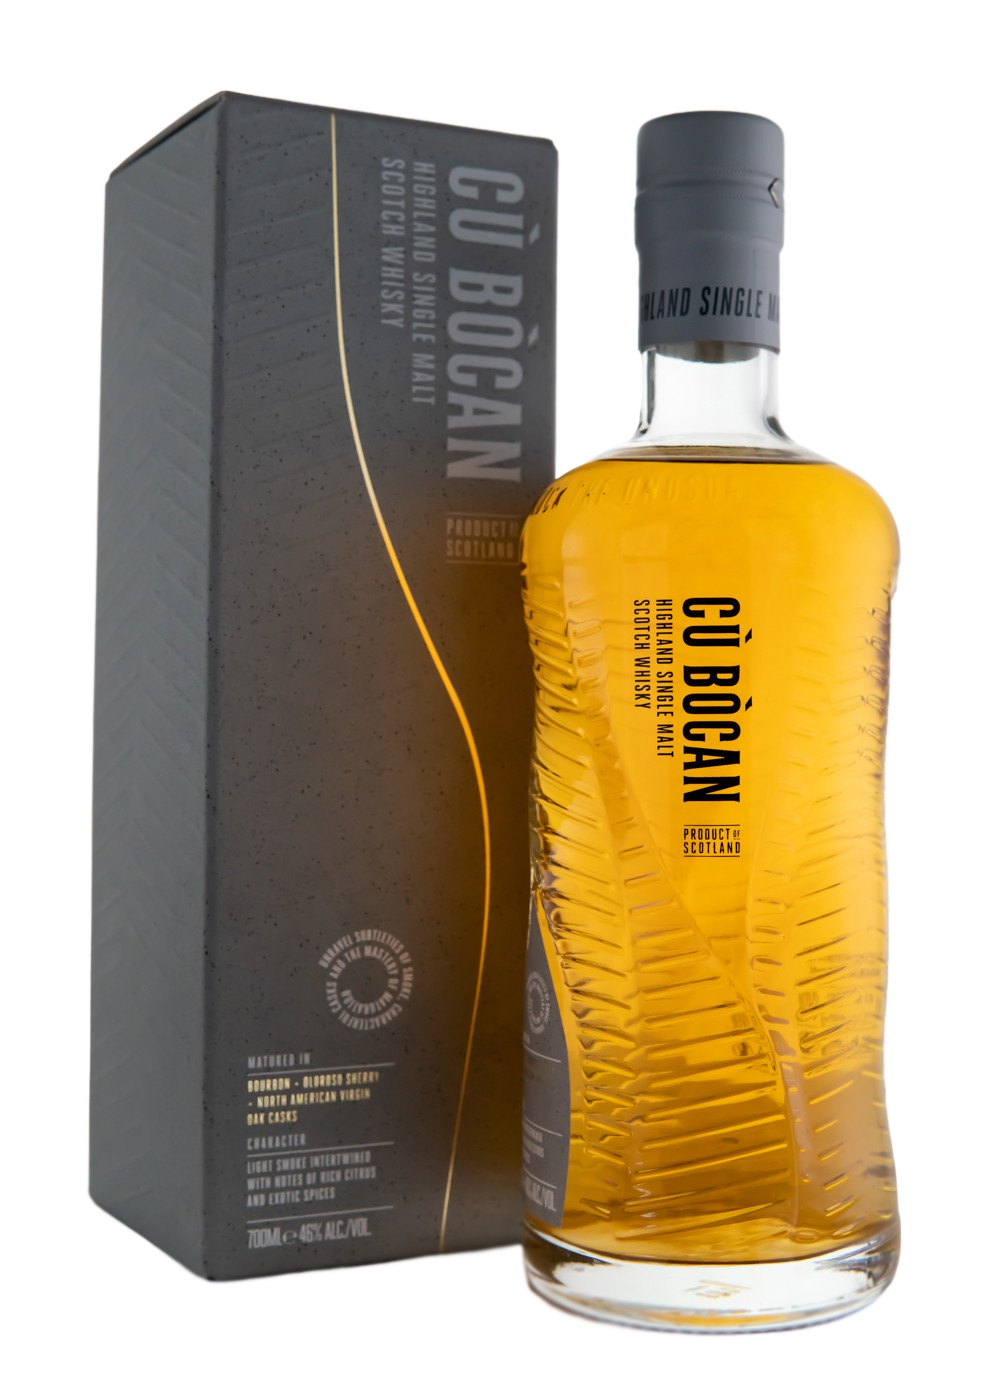 Tomatin Cu Bocan Highland Single Malt Scotch Whisky - 0,7L 46% vol